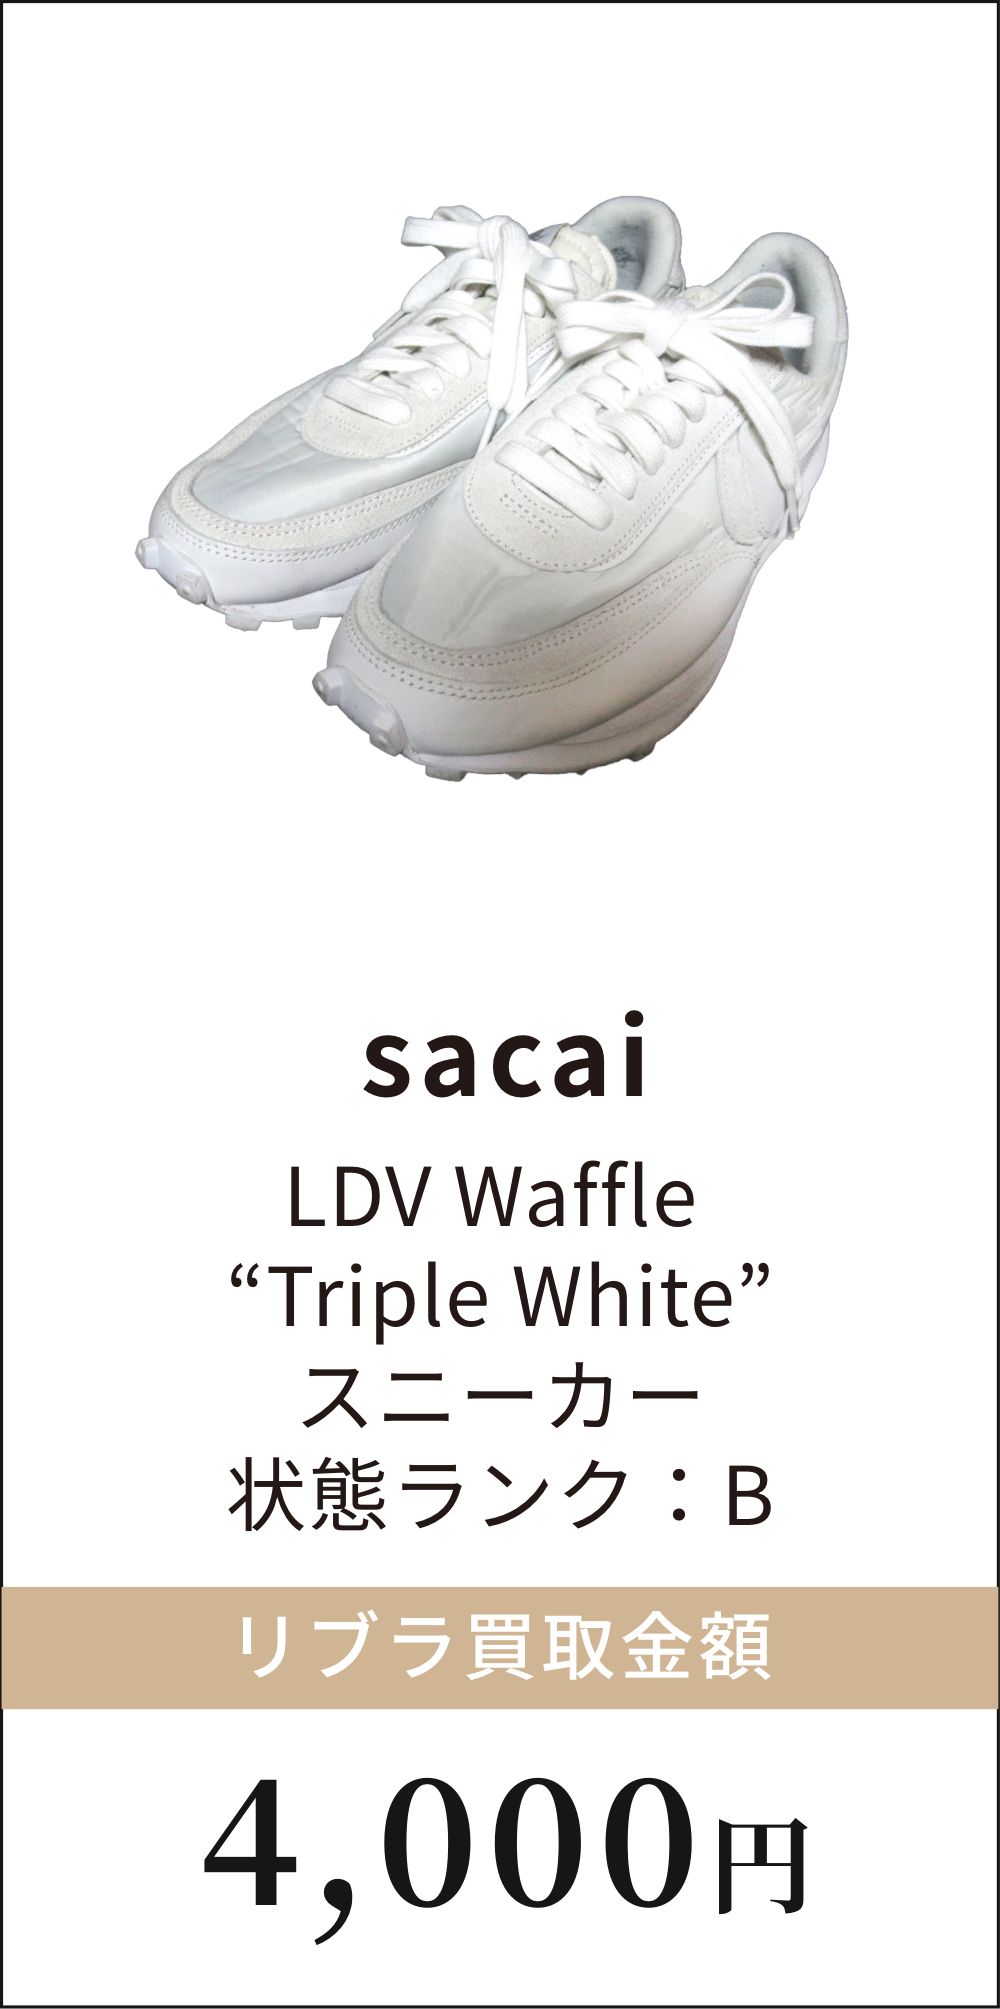 sacai LDV Waffle Triple White スニーカー